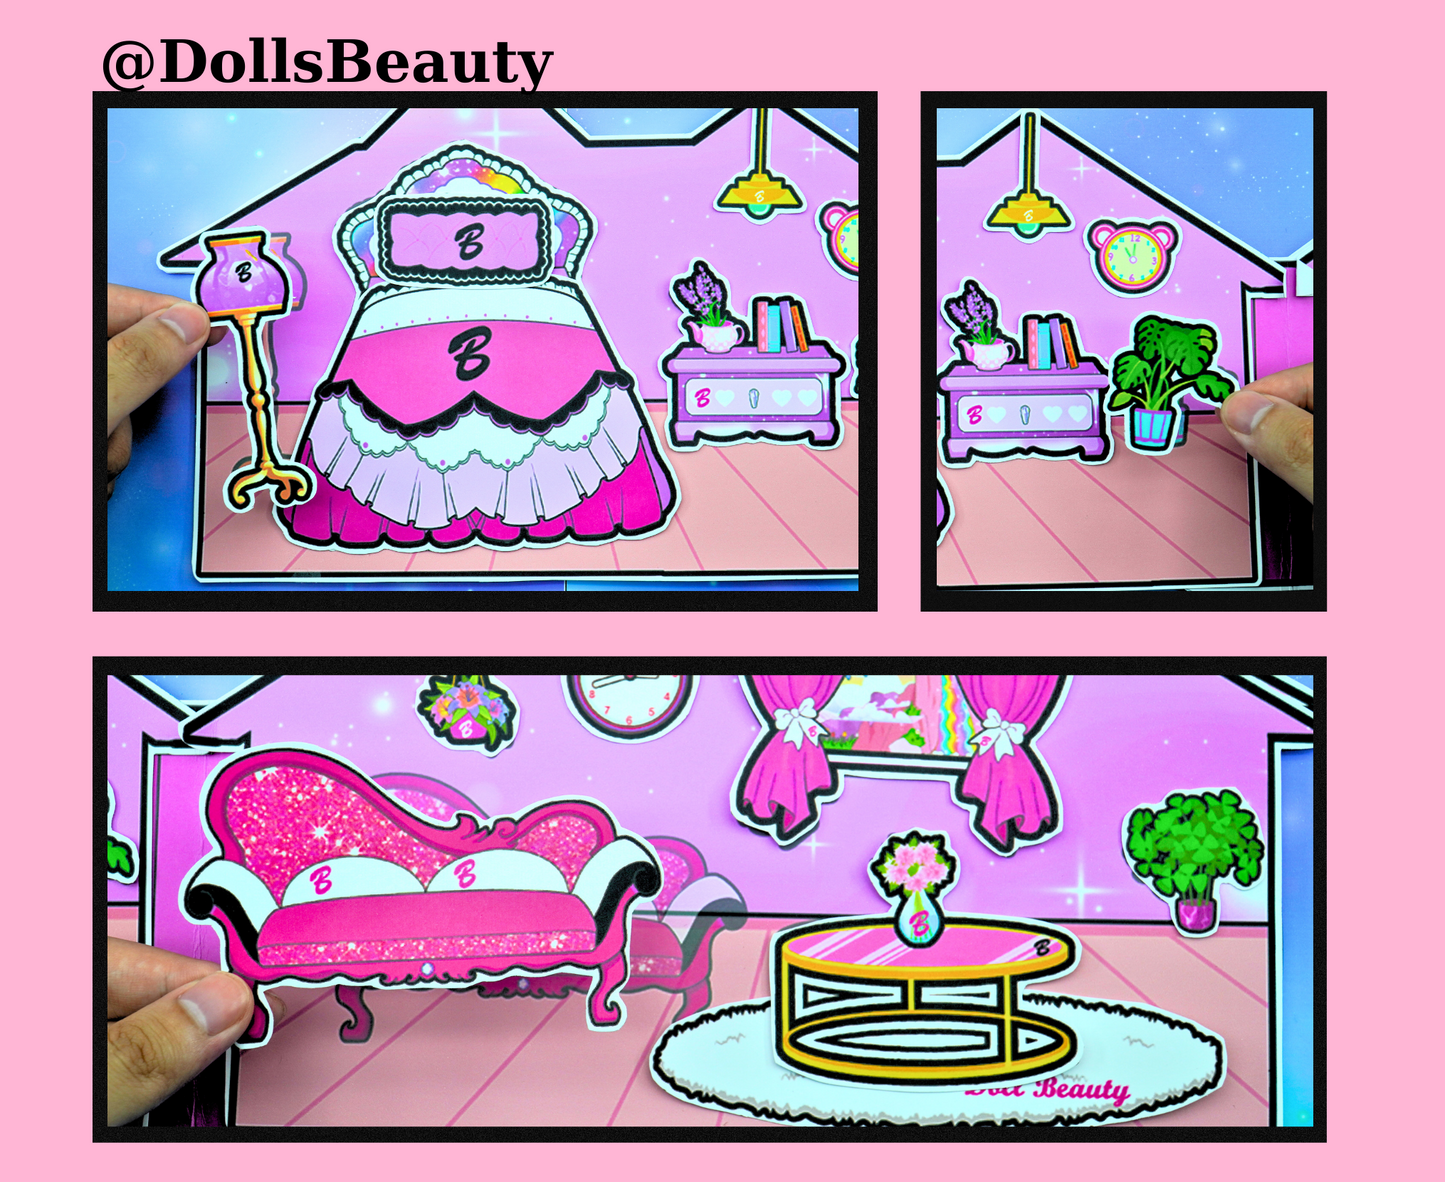 Printable Barbie doll house  🌈 Barbie Dollhouse Background | Bundle Digital Backdrop PDF Barbie Dream House 🌈 Woa Doll Crafts